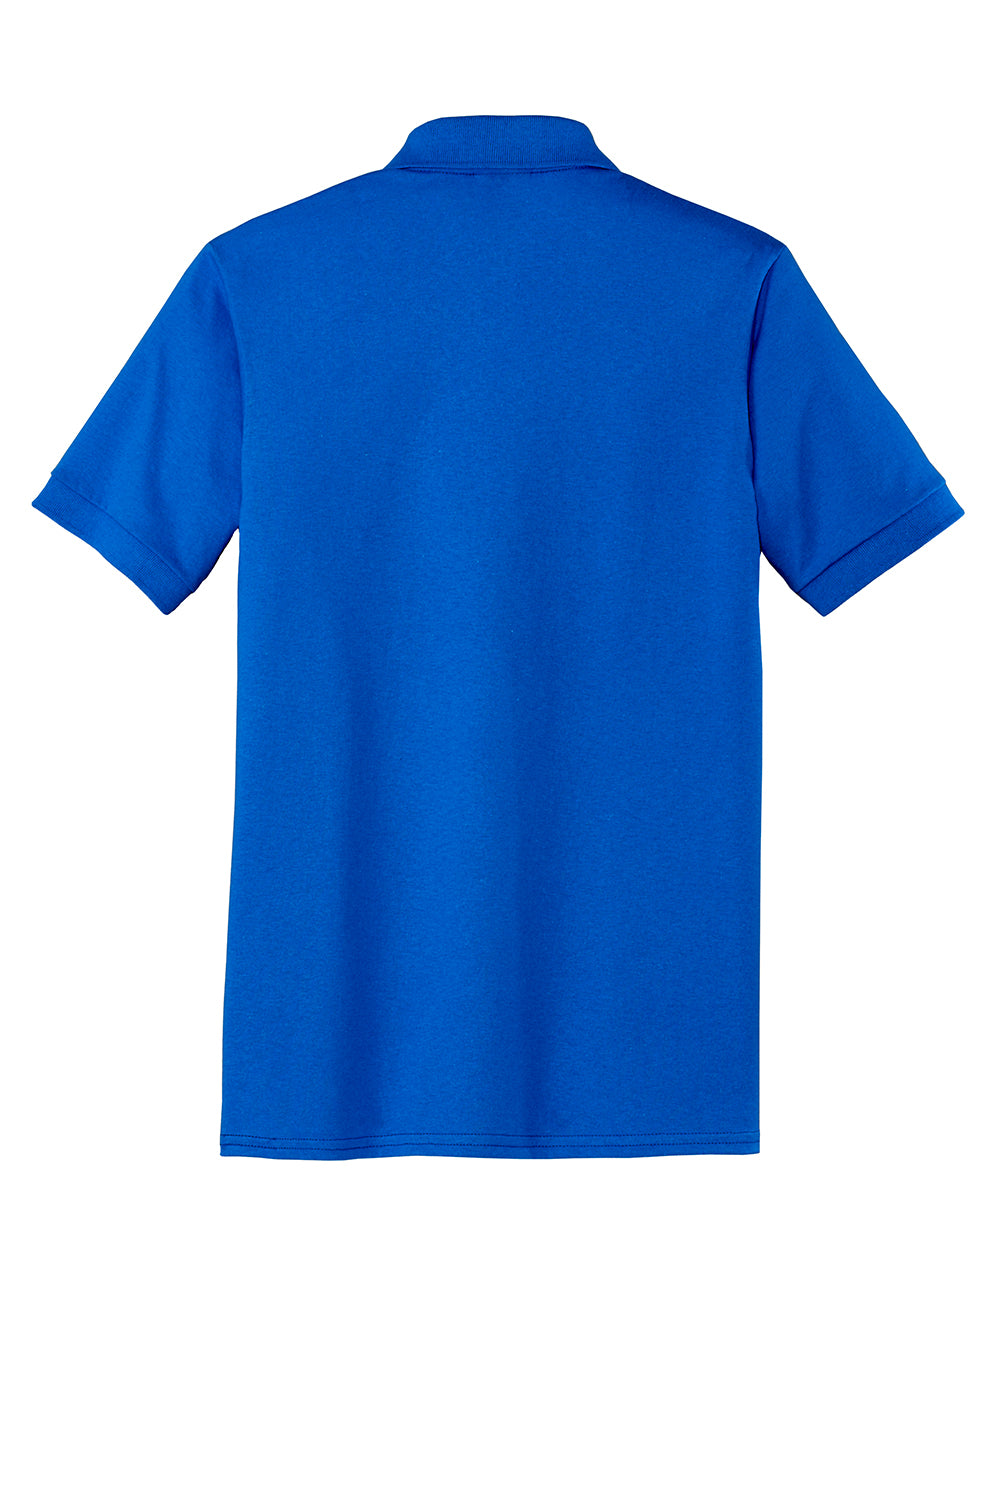 Port & Company KP55P Mens Core Stain Resistant Short Sleeve Polo Shirt w/ Pocket Royal Blue Flat Back